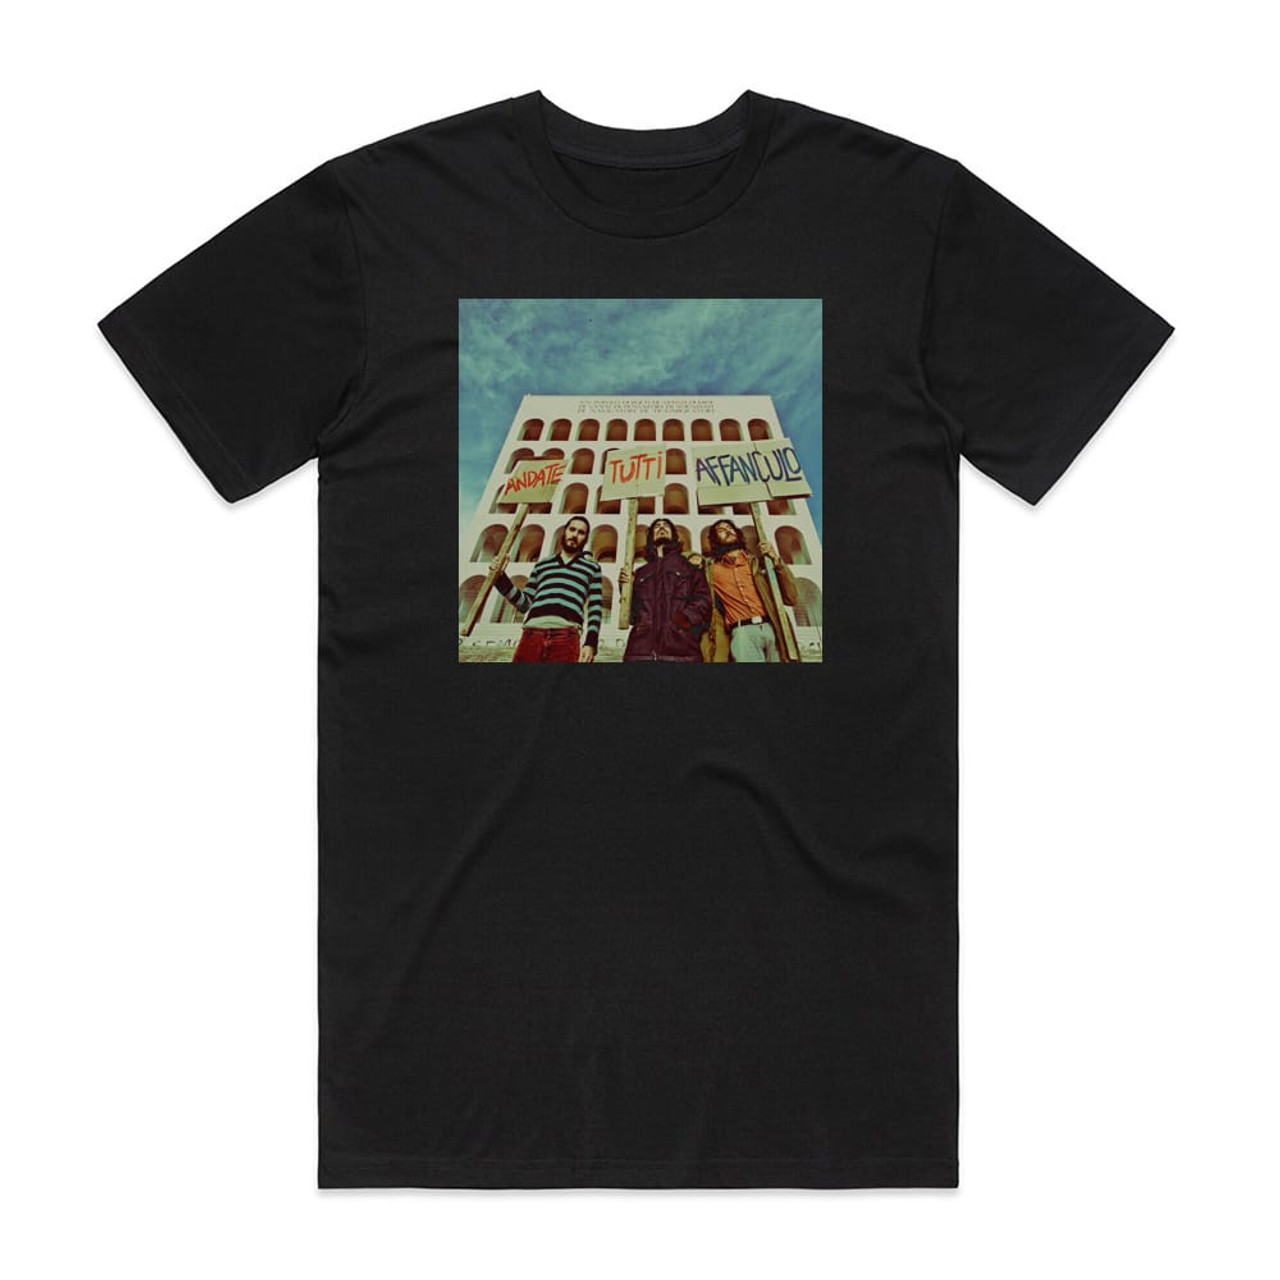 The Zen Circus Andate Tutti Affanculo Album Cover T-Shirt Black